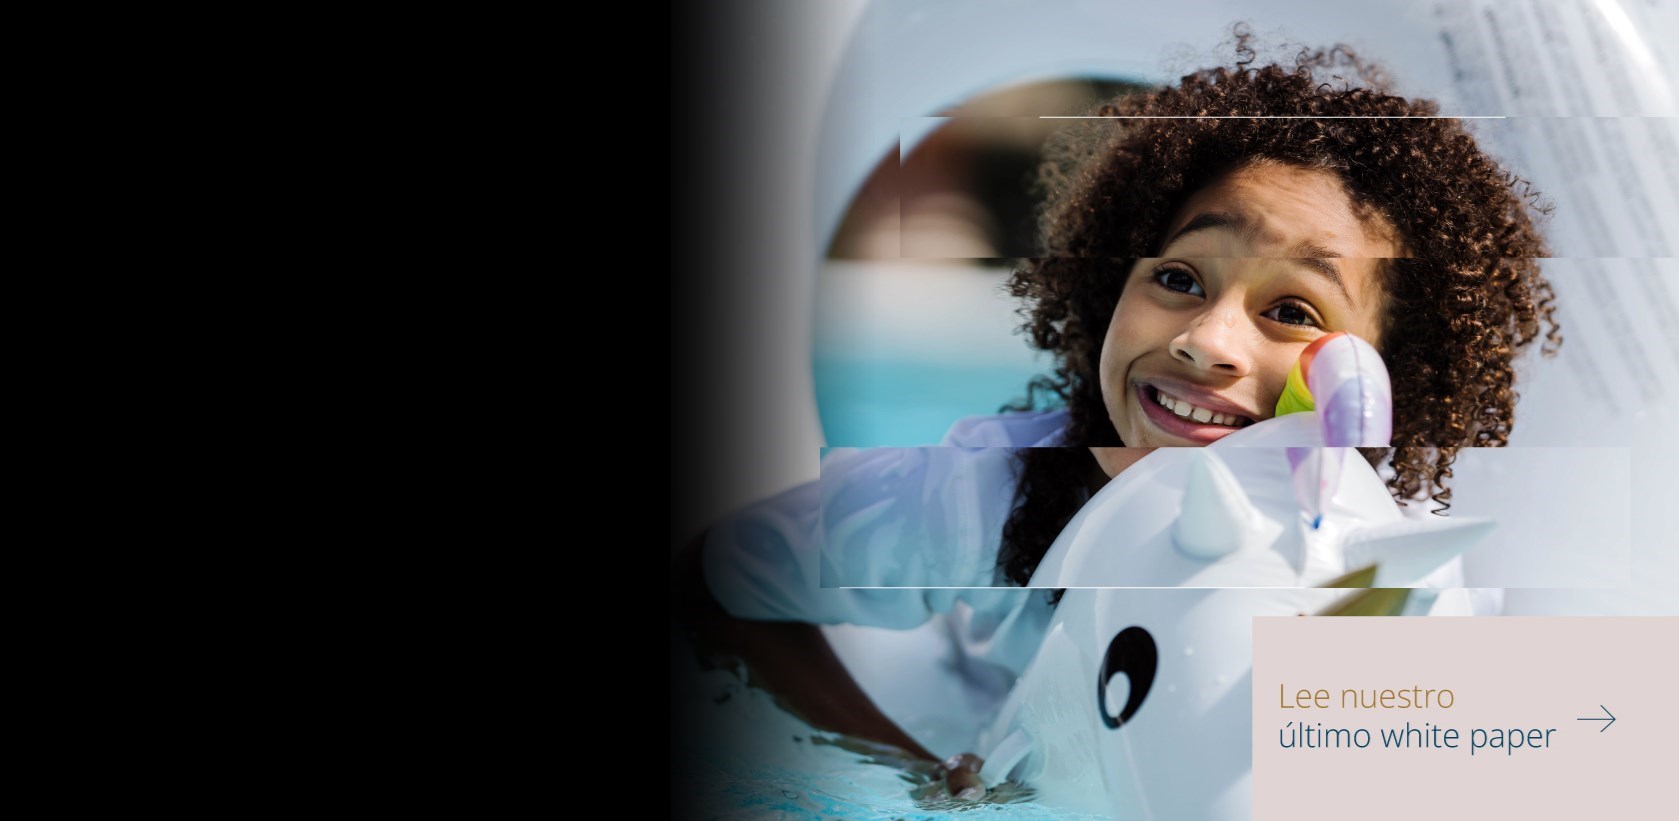 Un niño dentro de la piscina usando un dispositivo flotante con forma de unicornio